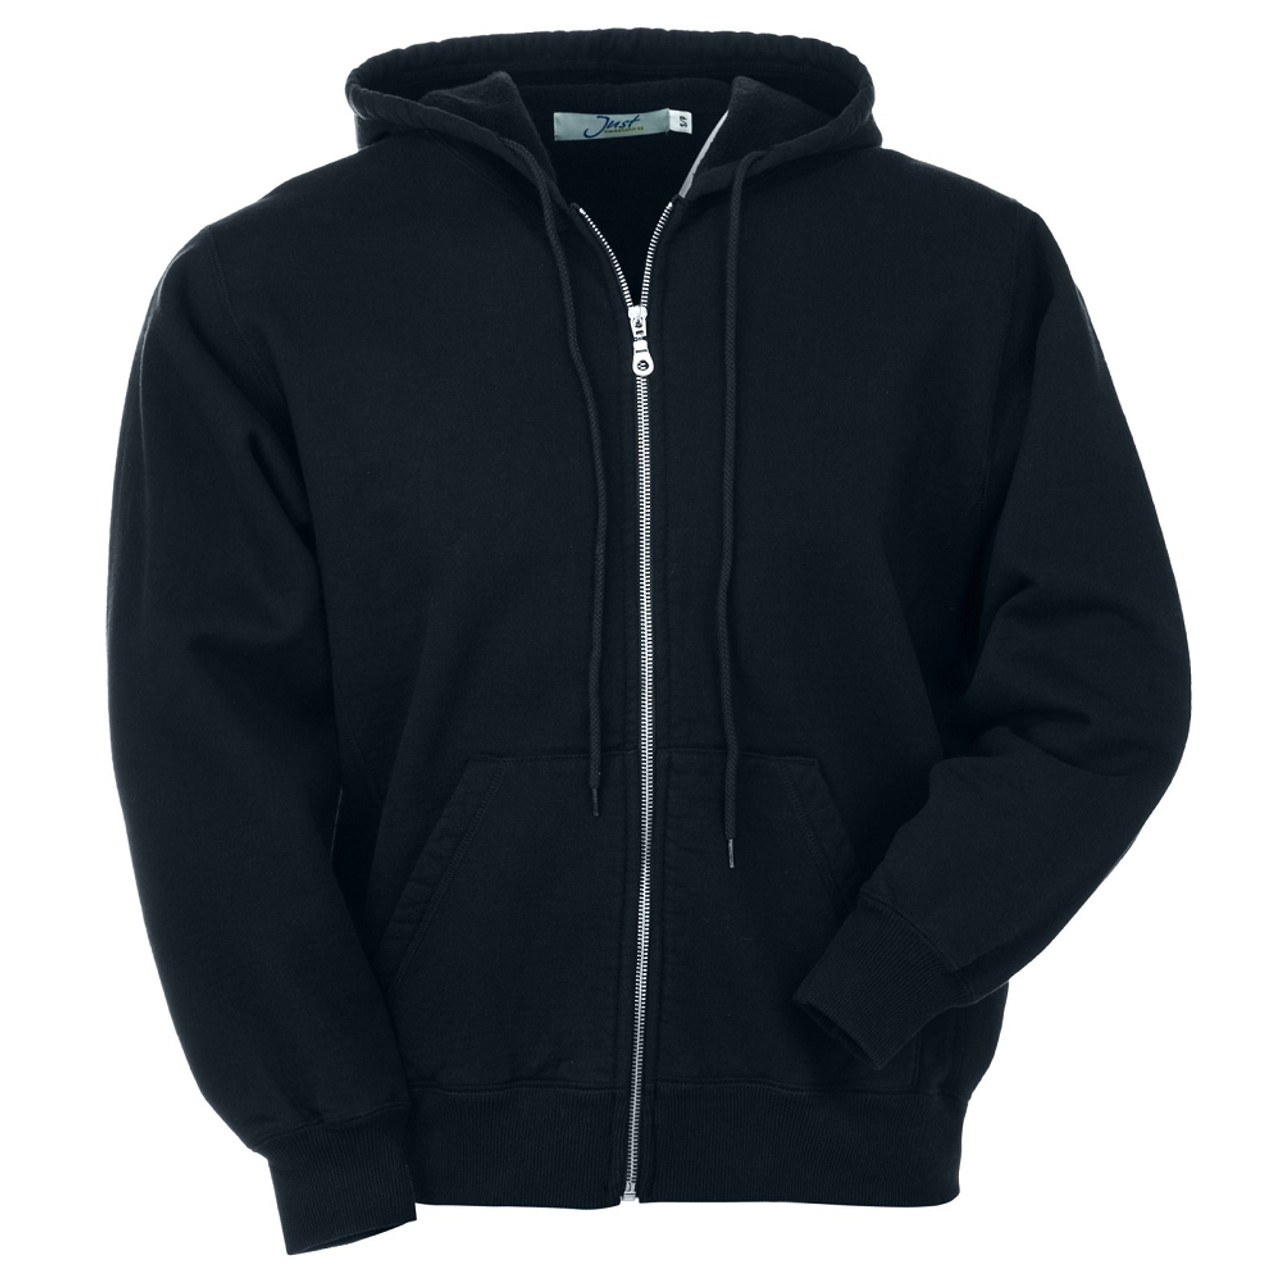 Heavyweight Sweatshirts 24 oz - Hooded Front Zipper Jacket